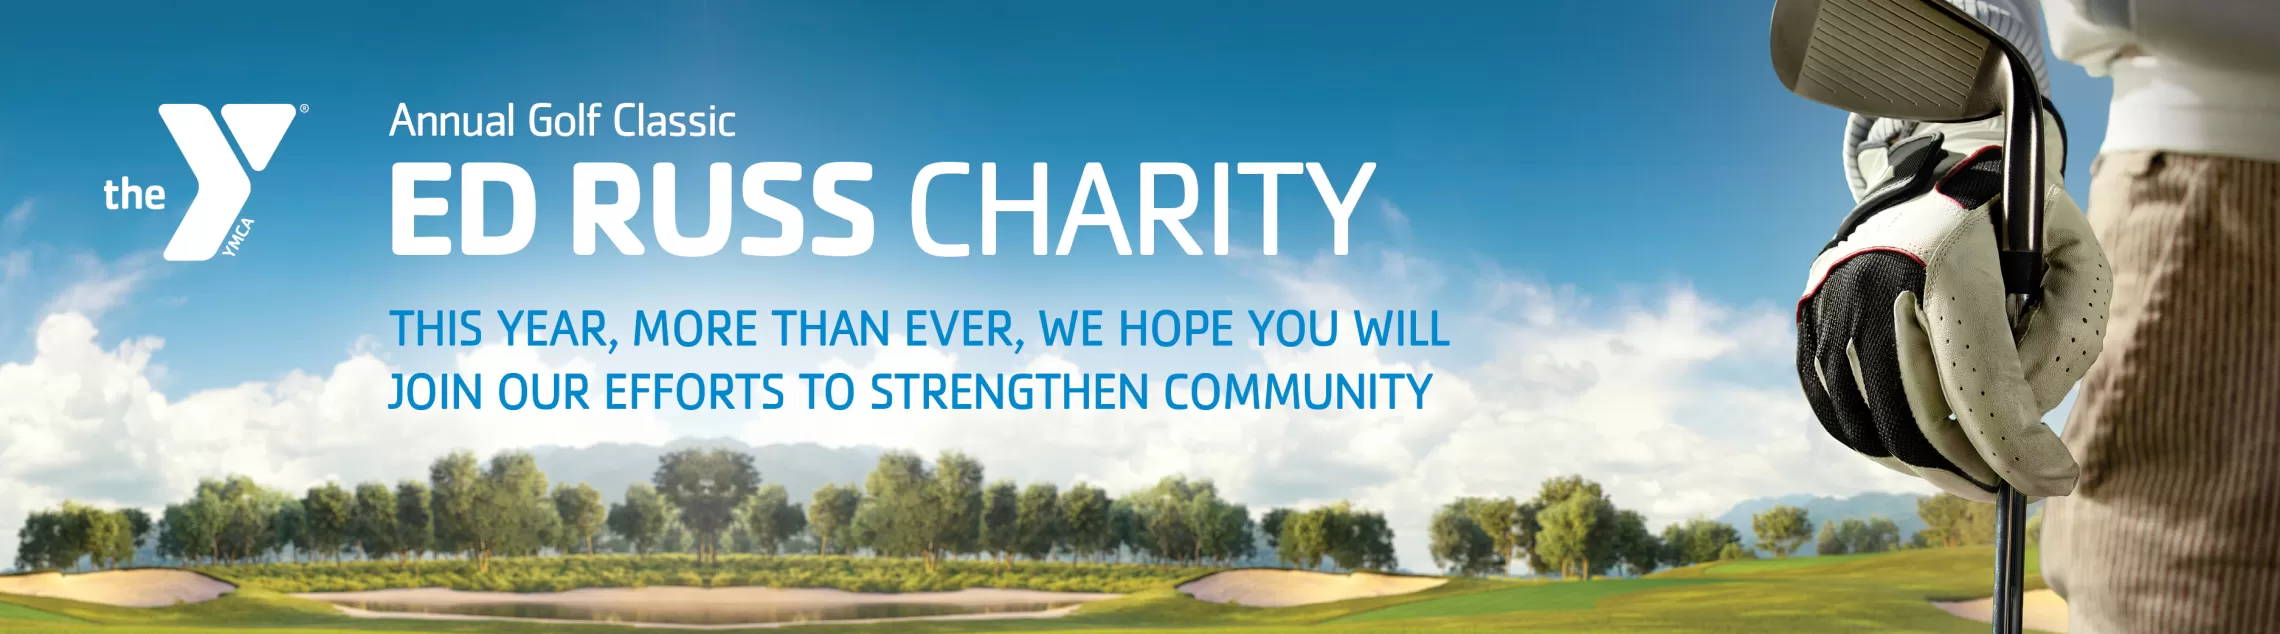 Ed Russ Charity Golf Classic Header